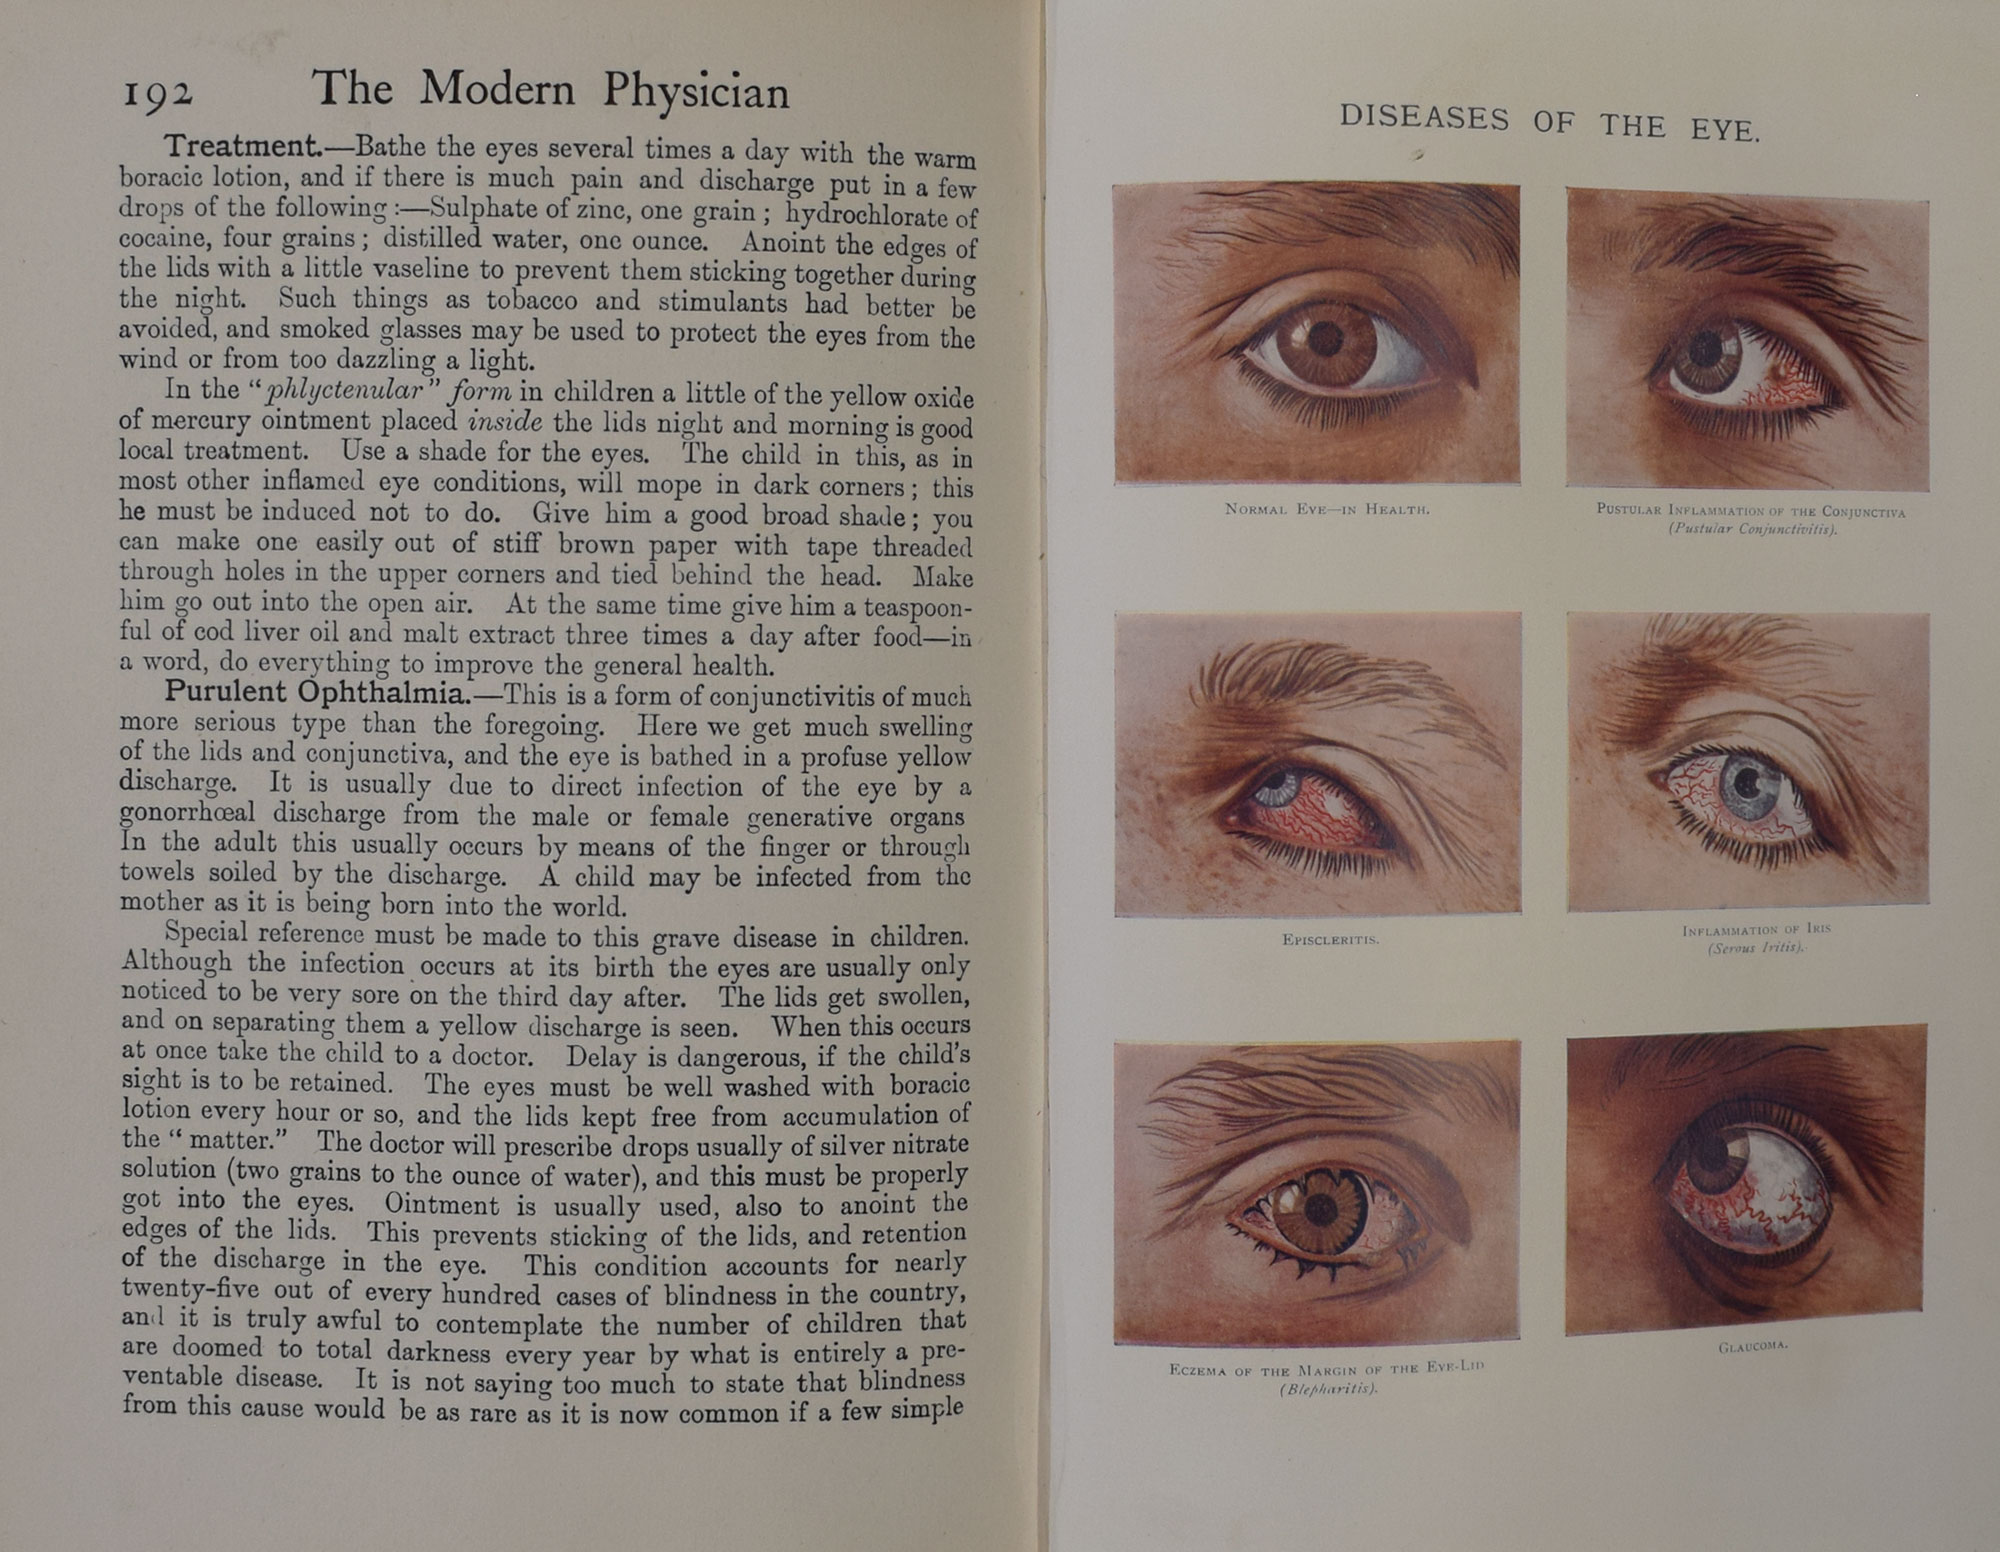 The Modern Physician. 5 volume set.